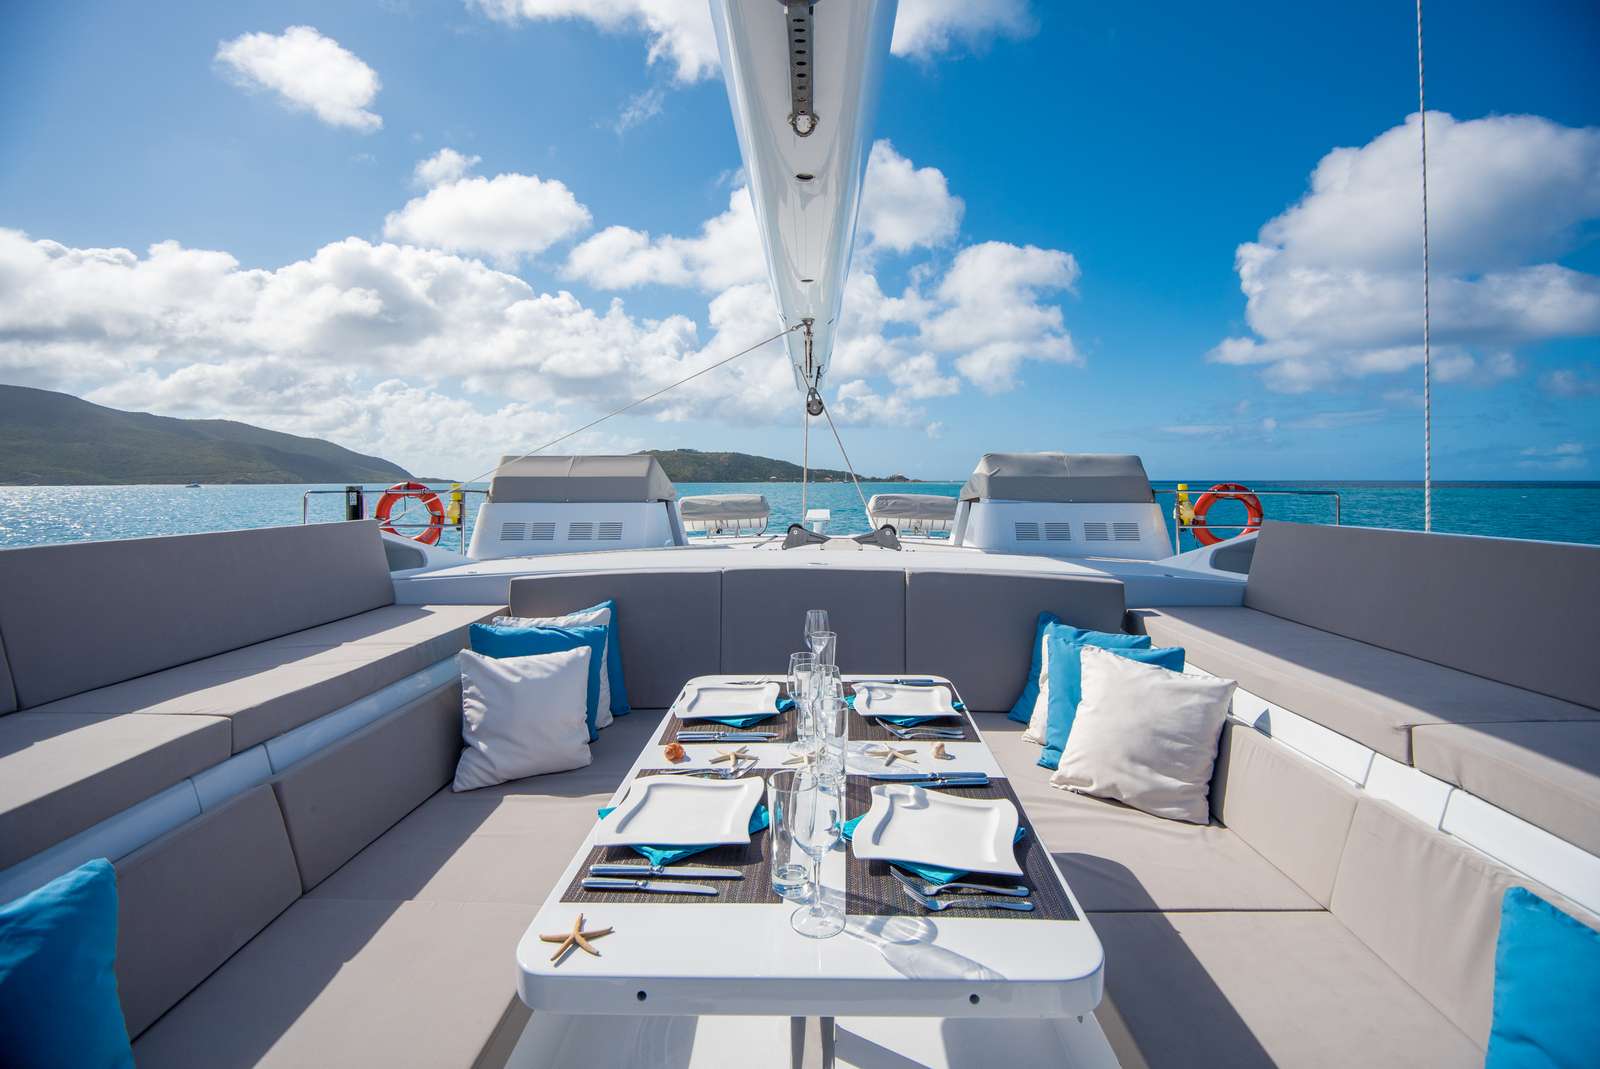 Catamaran Yacht 'BELLA VITA' Upper deck dining, 10 PAX, 6 Crew, 105.00 Ft, 32.00 Meters, Built 2003, C.M.N. Cherbourg, Fr, Refit Year 2018